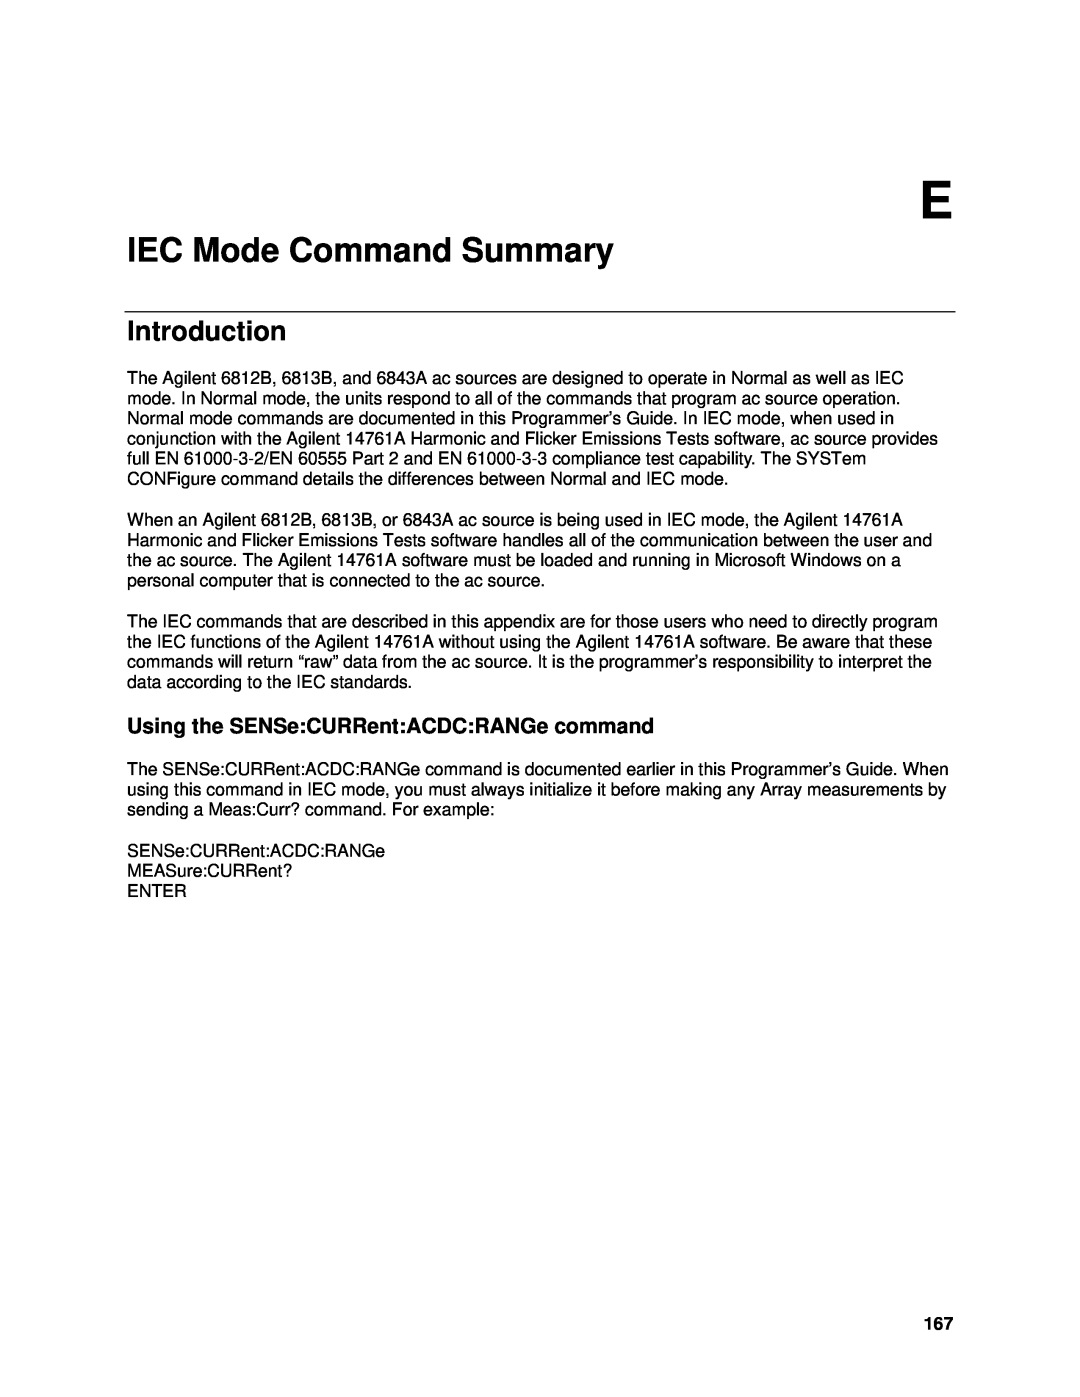 Agilent Technologies 6812B, 6834B, 6814B Using the SENSe:CURRent:ACDC:RANGe command, IEC Mode Command Summary, Introduction 